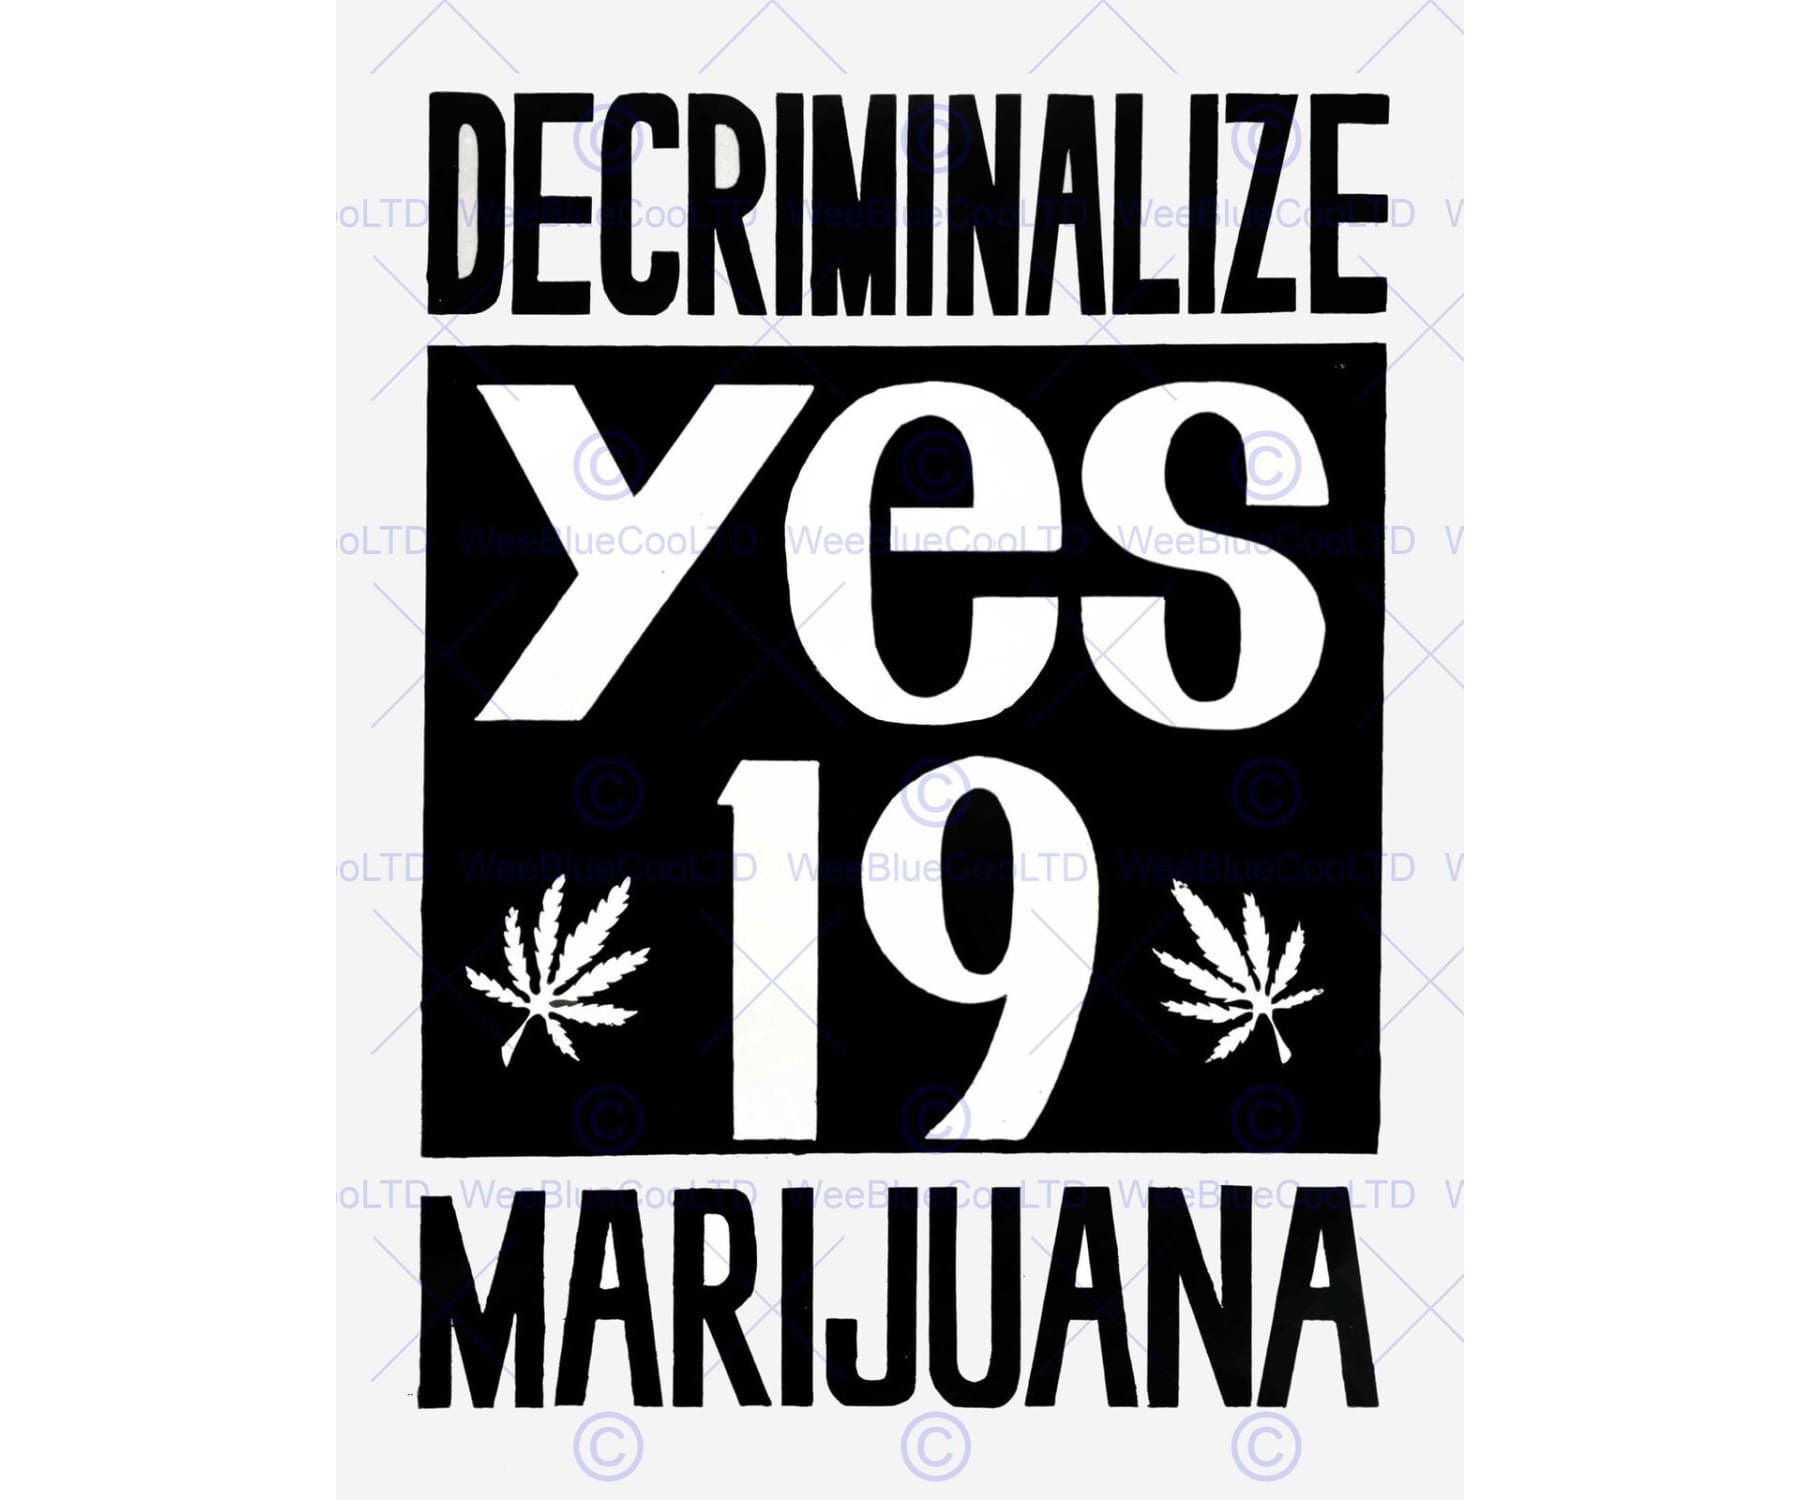 Hanf und Hemp - Poster Cannabis Marijuana Politik 30x41cm